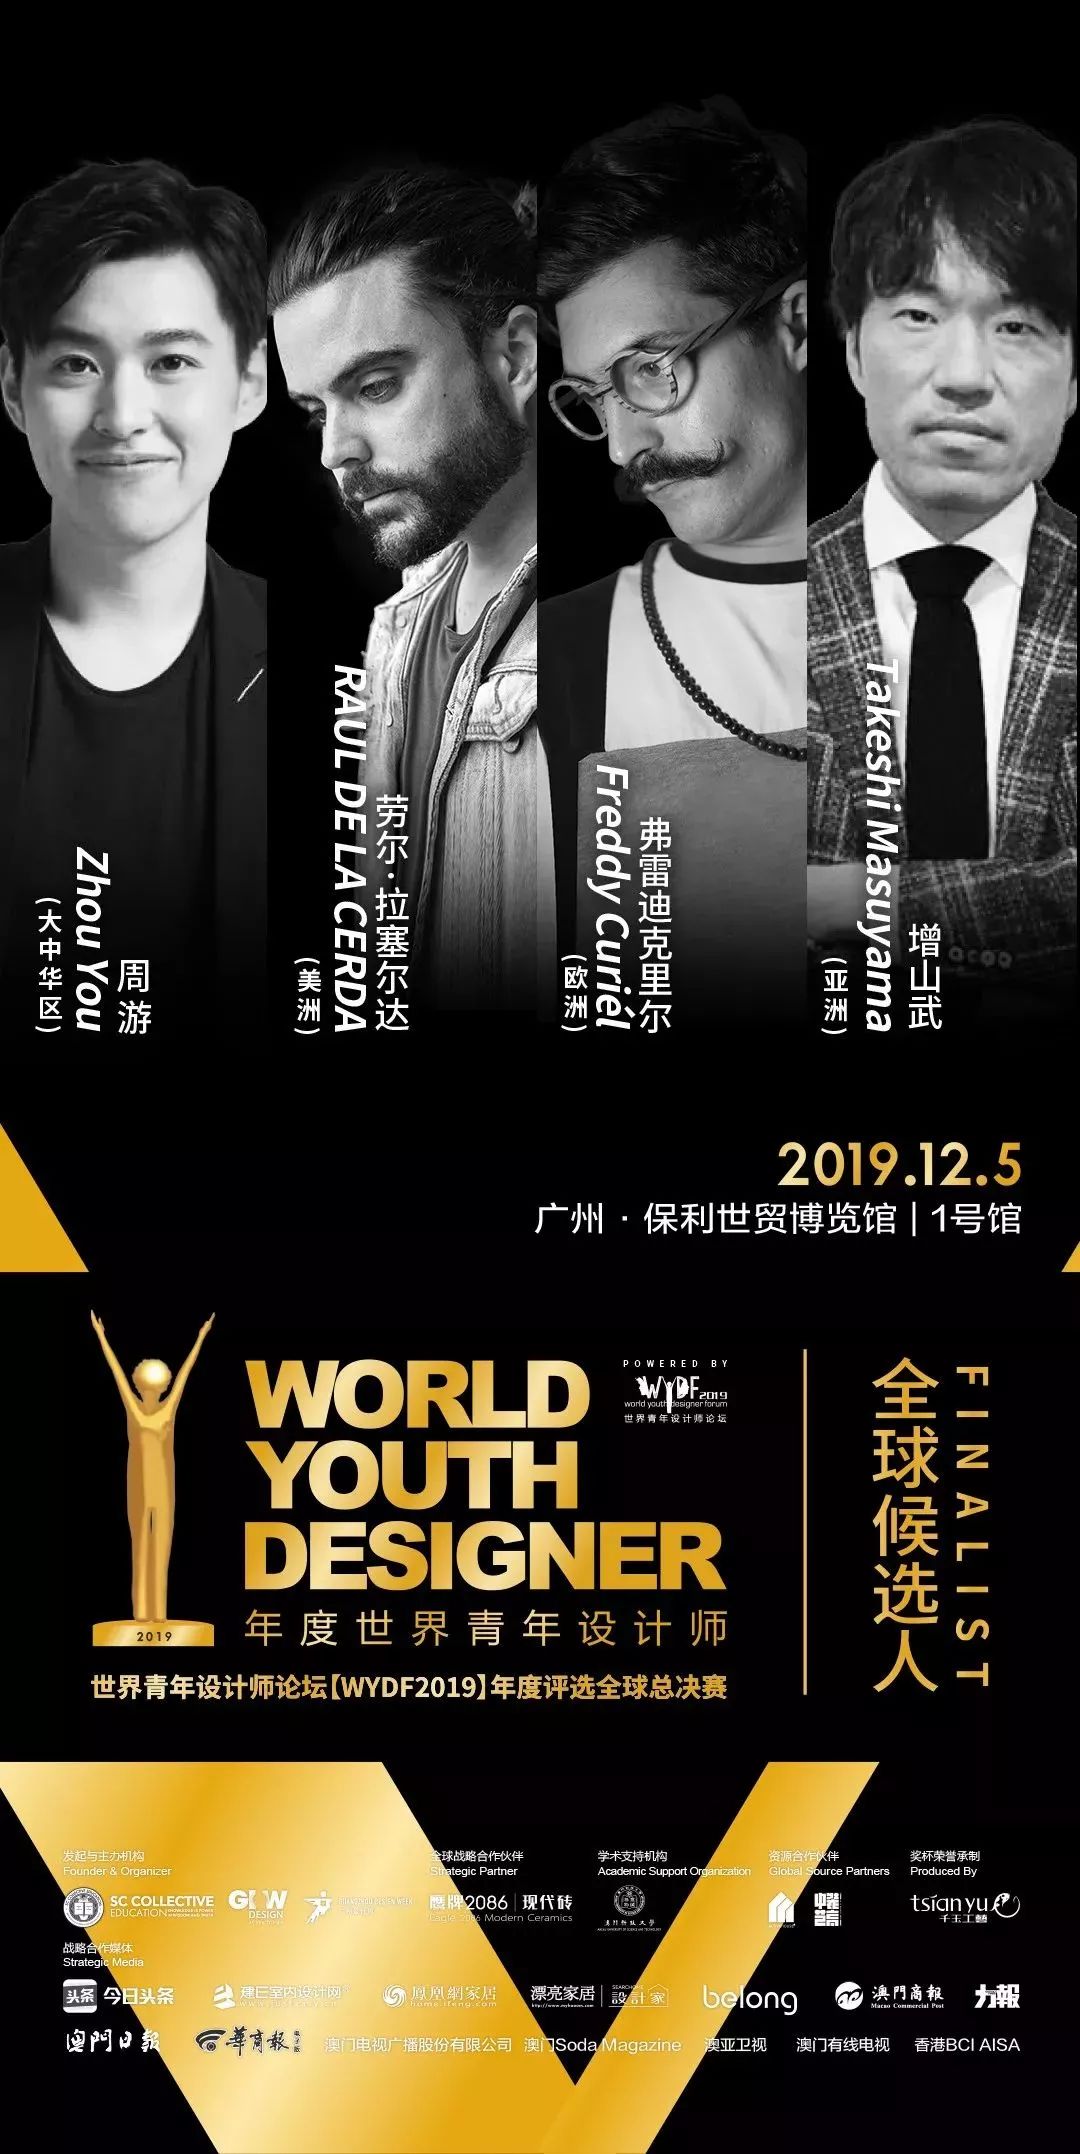 「WYDF2019年度世界青年设计师」会是他吗？三天后荣耀揭晓！(图4)